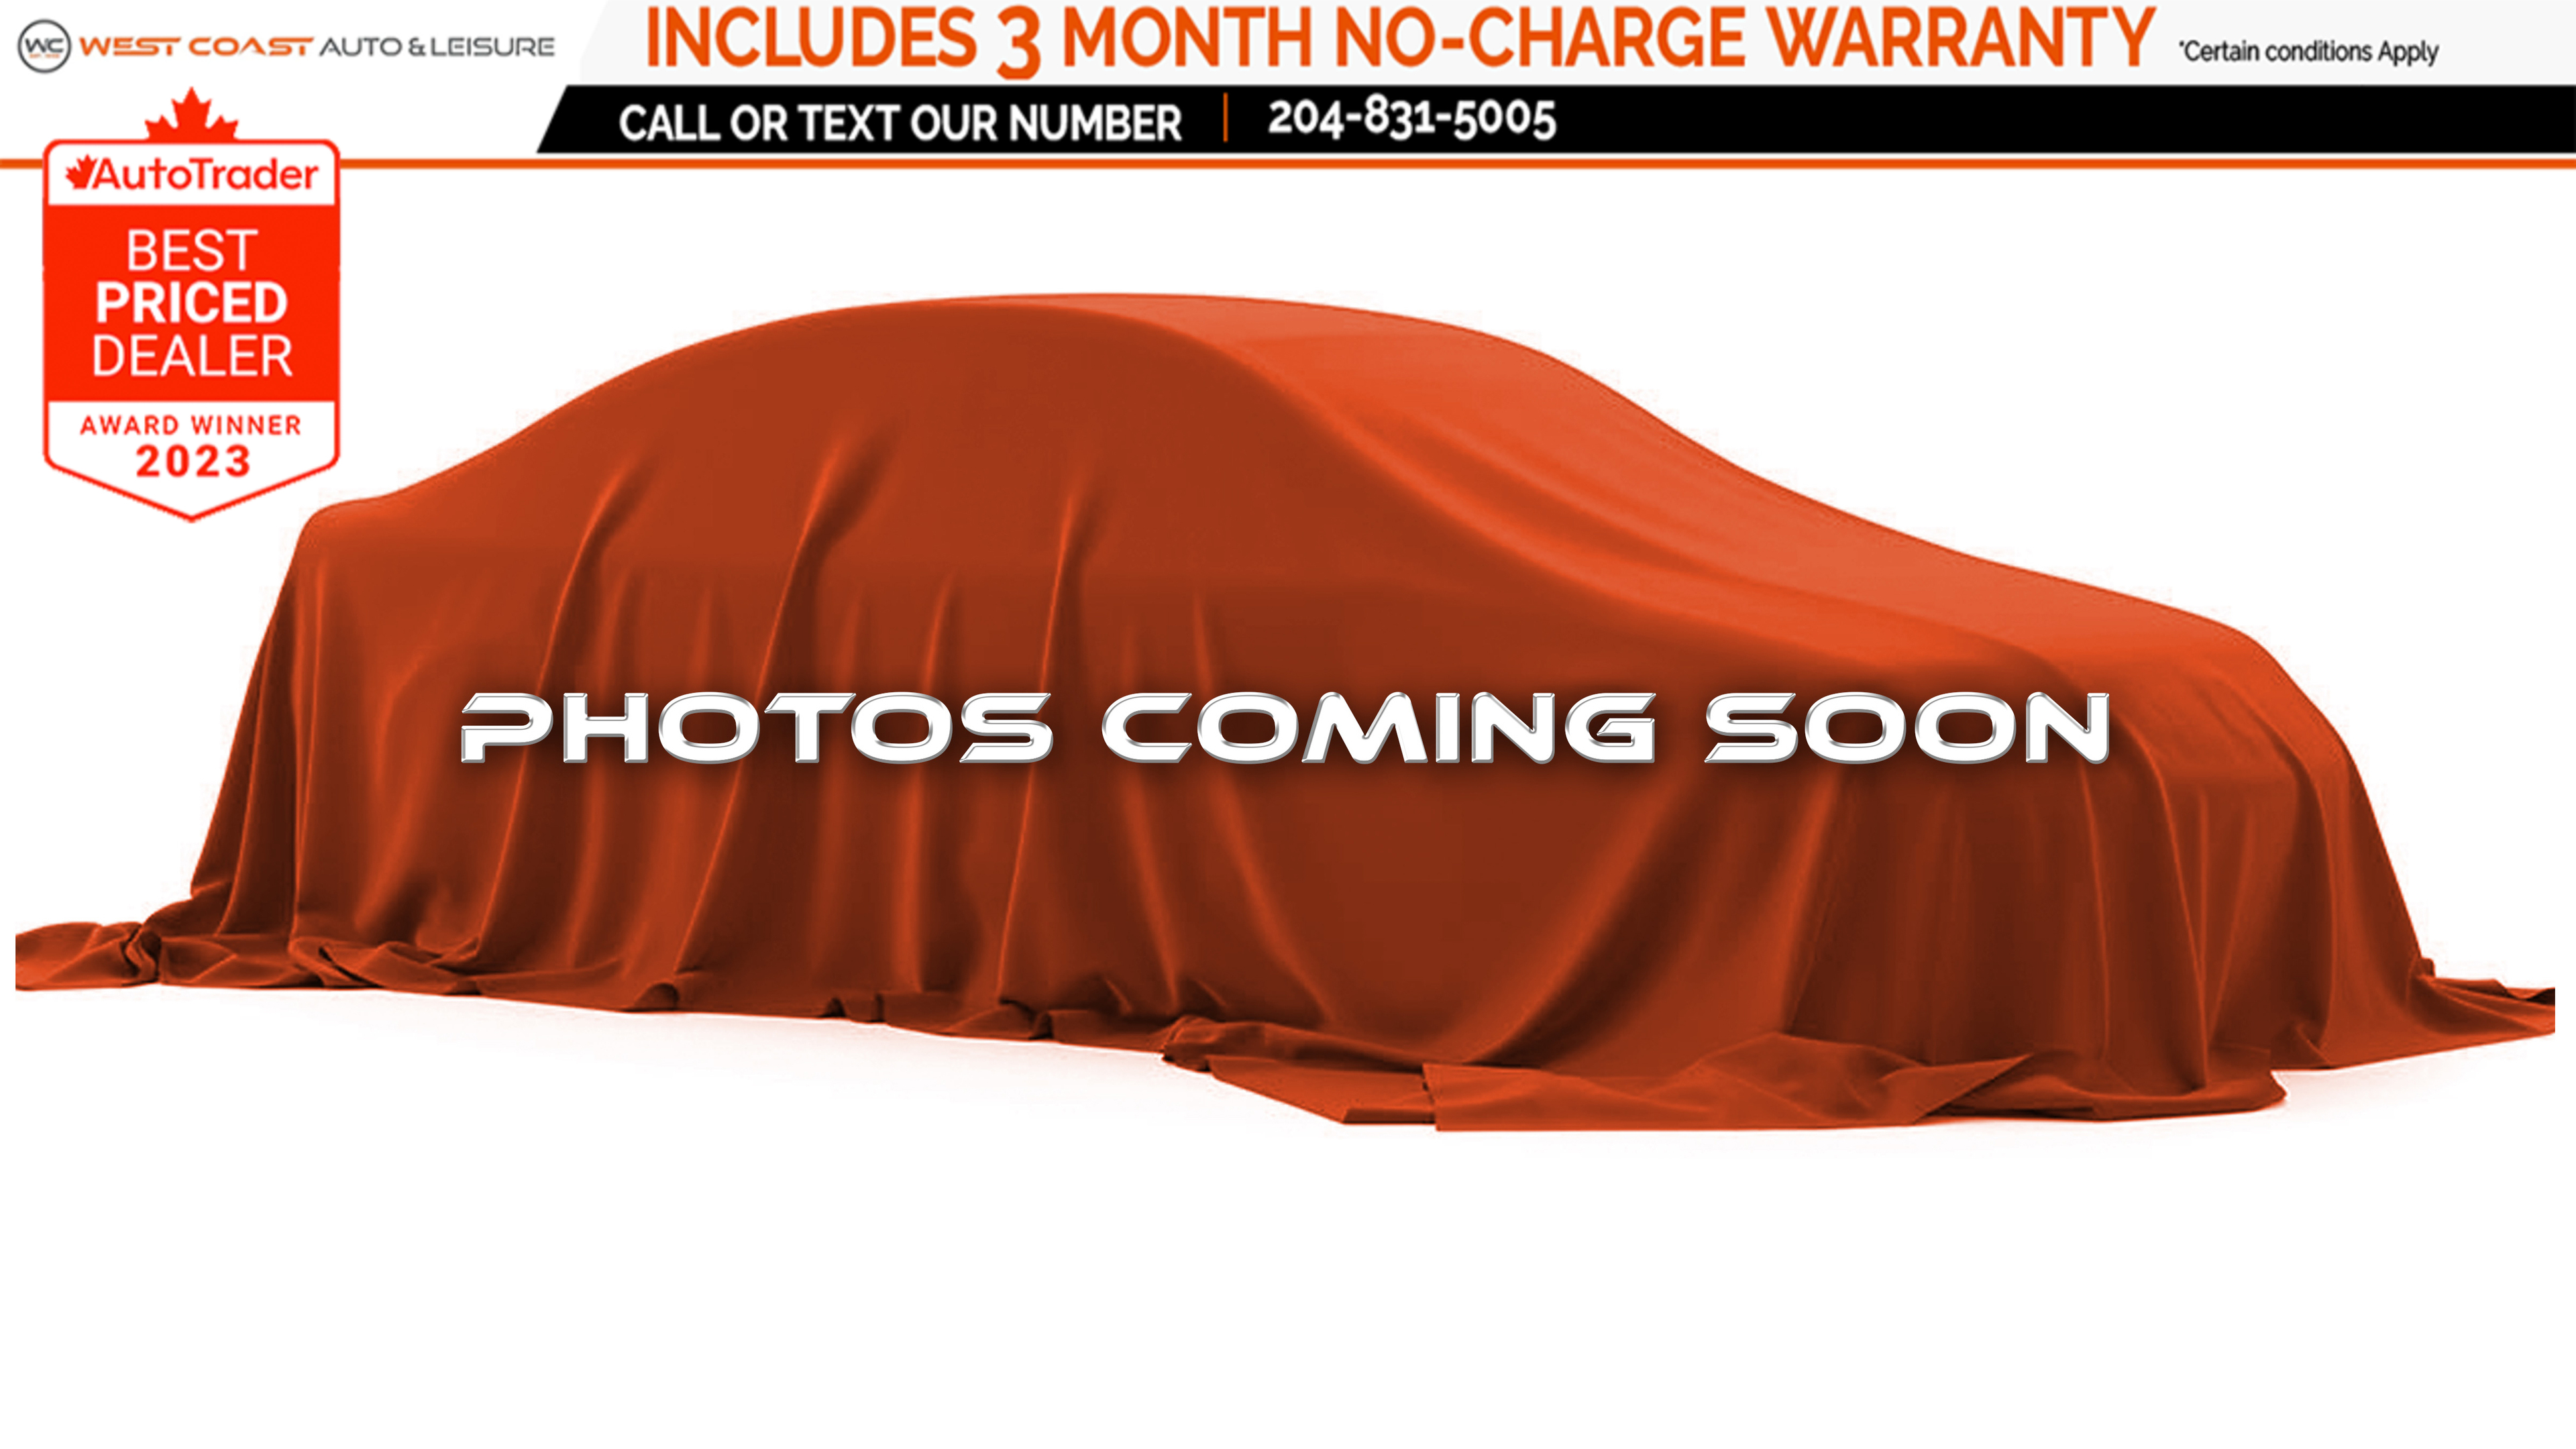 2021 Subaru Forester Touring AWD | Lifetime Powertrain Warranty Inc.